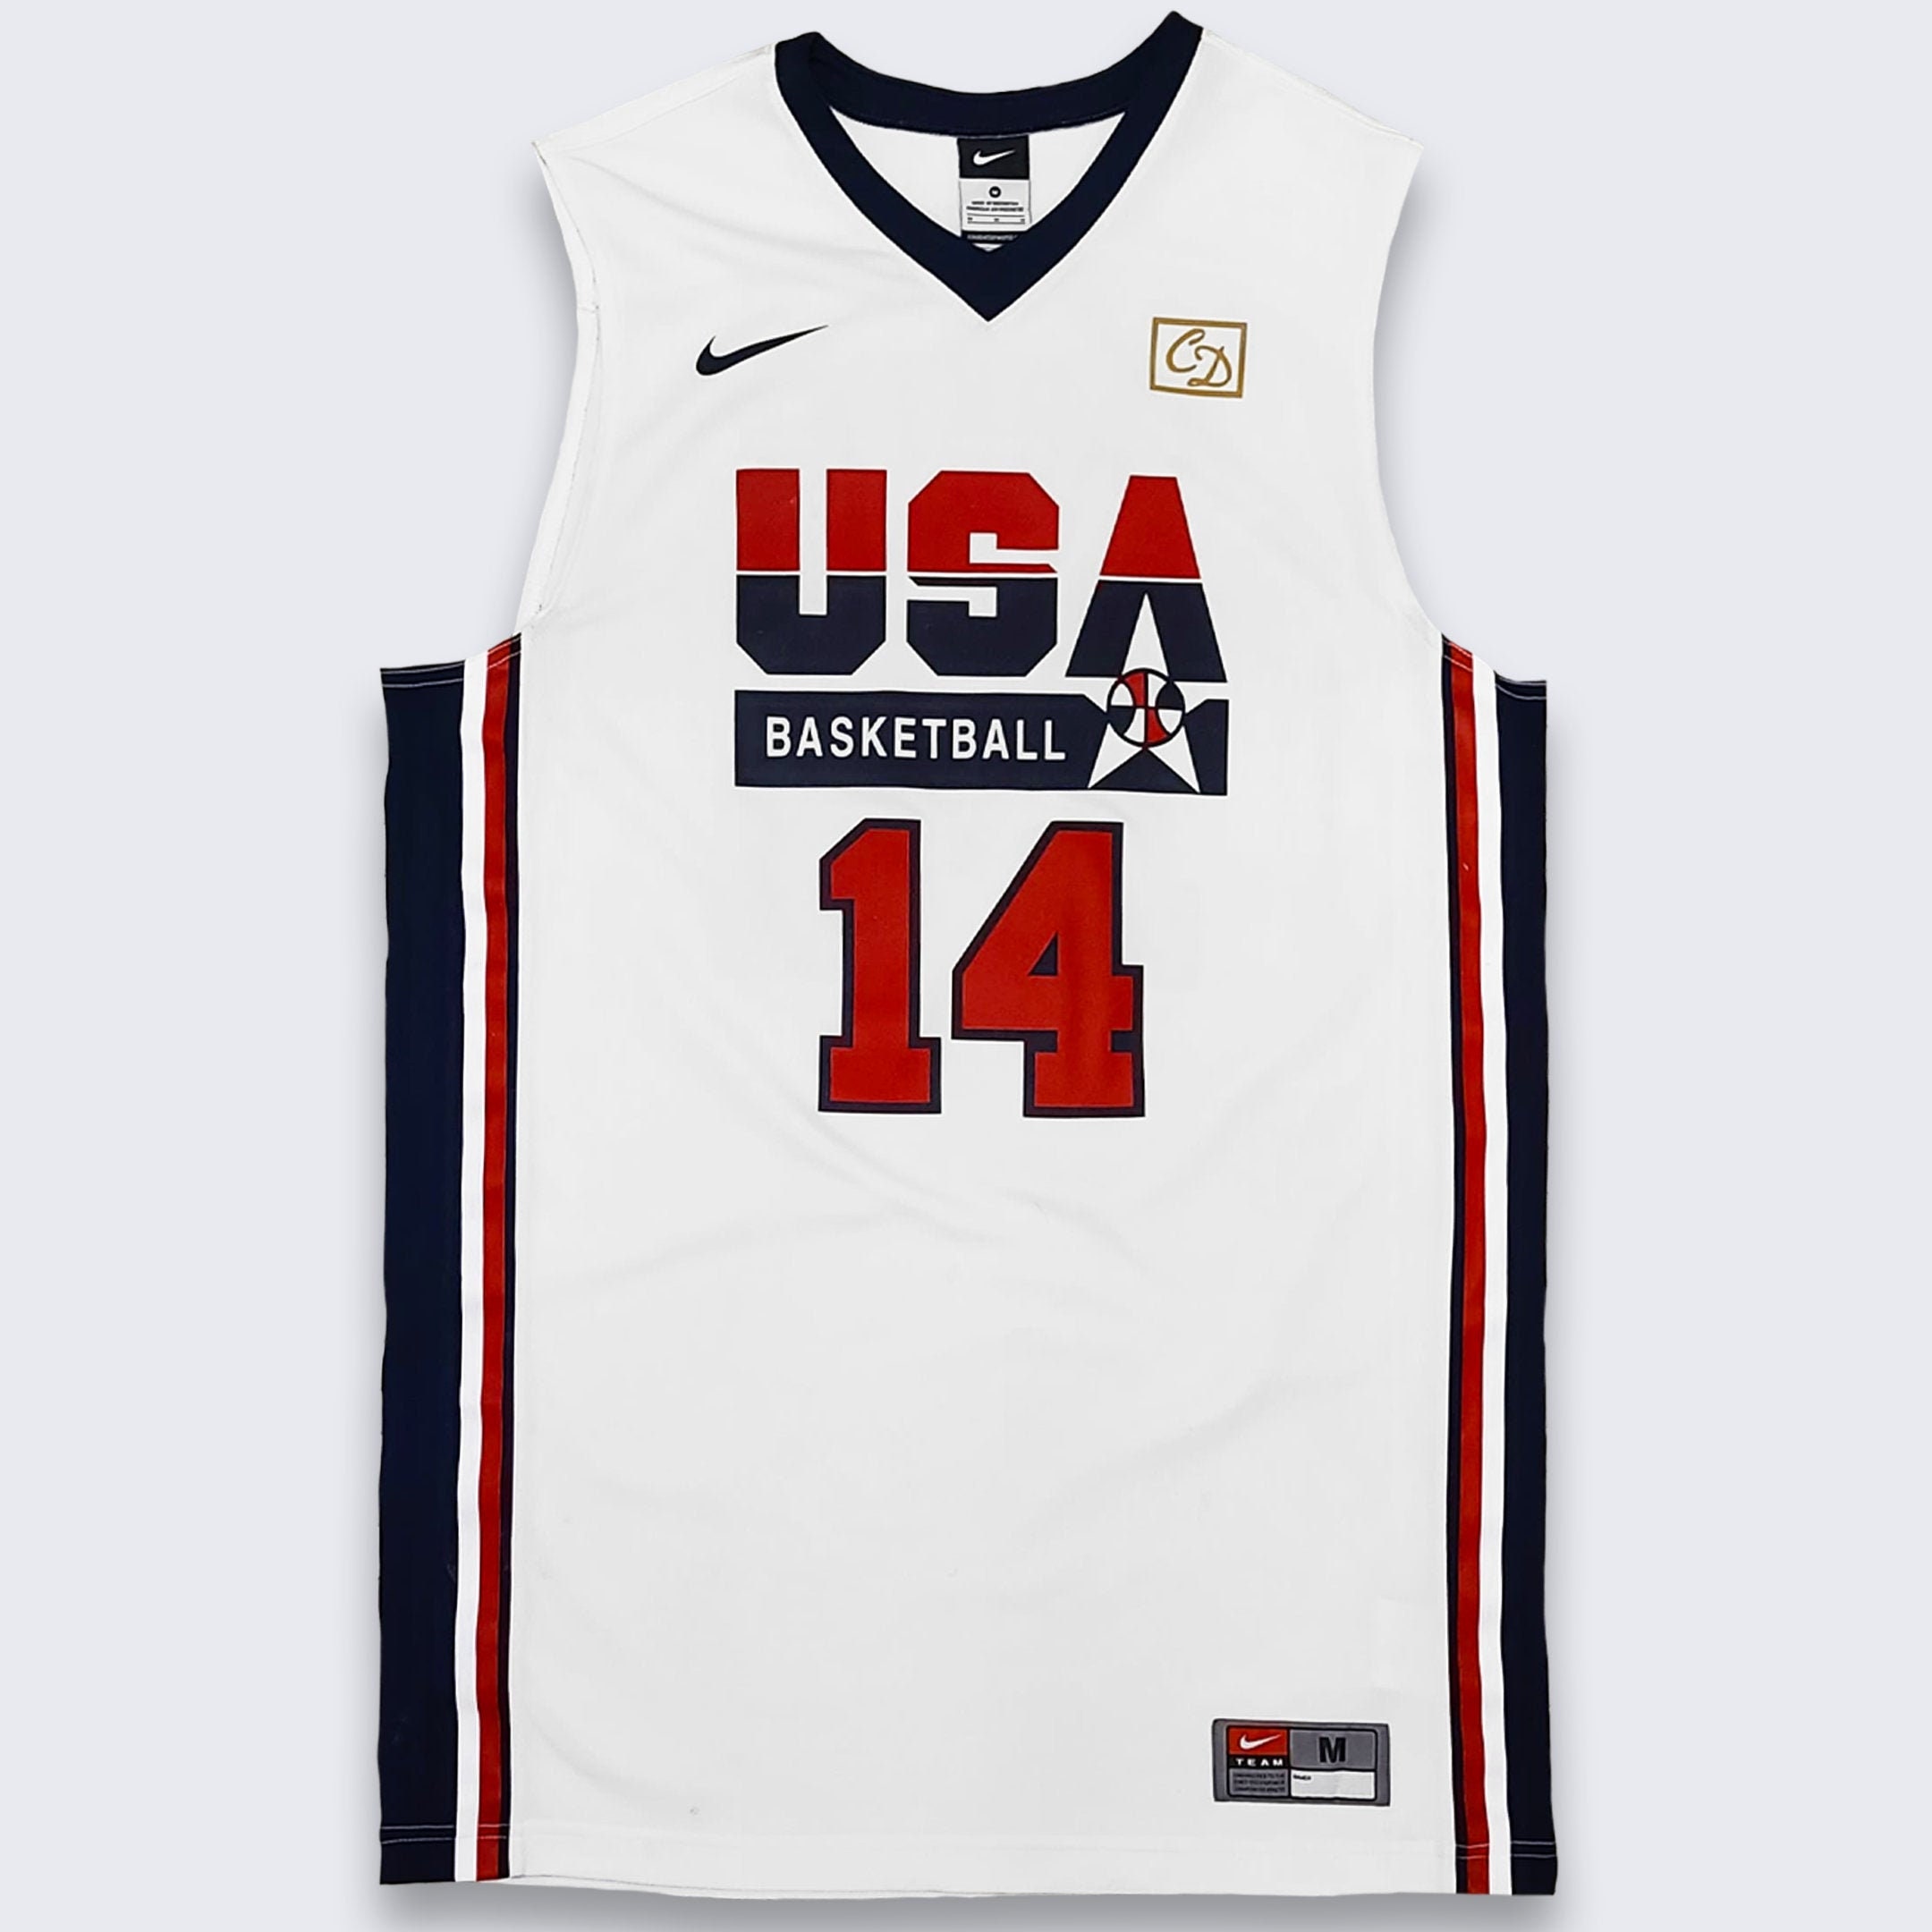 Tokyo Olympics: USA Basketball jerseys, shirts and caps are